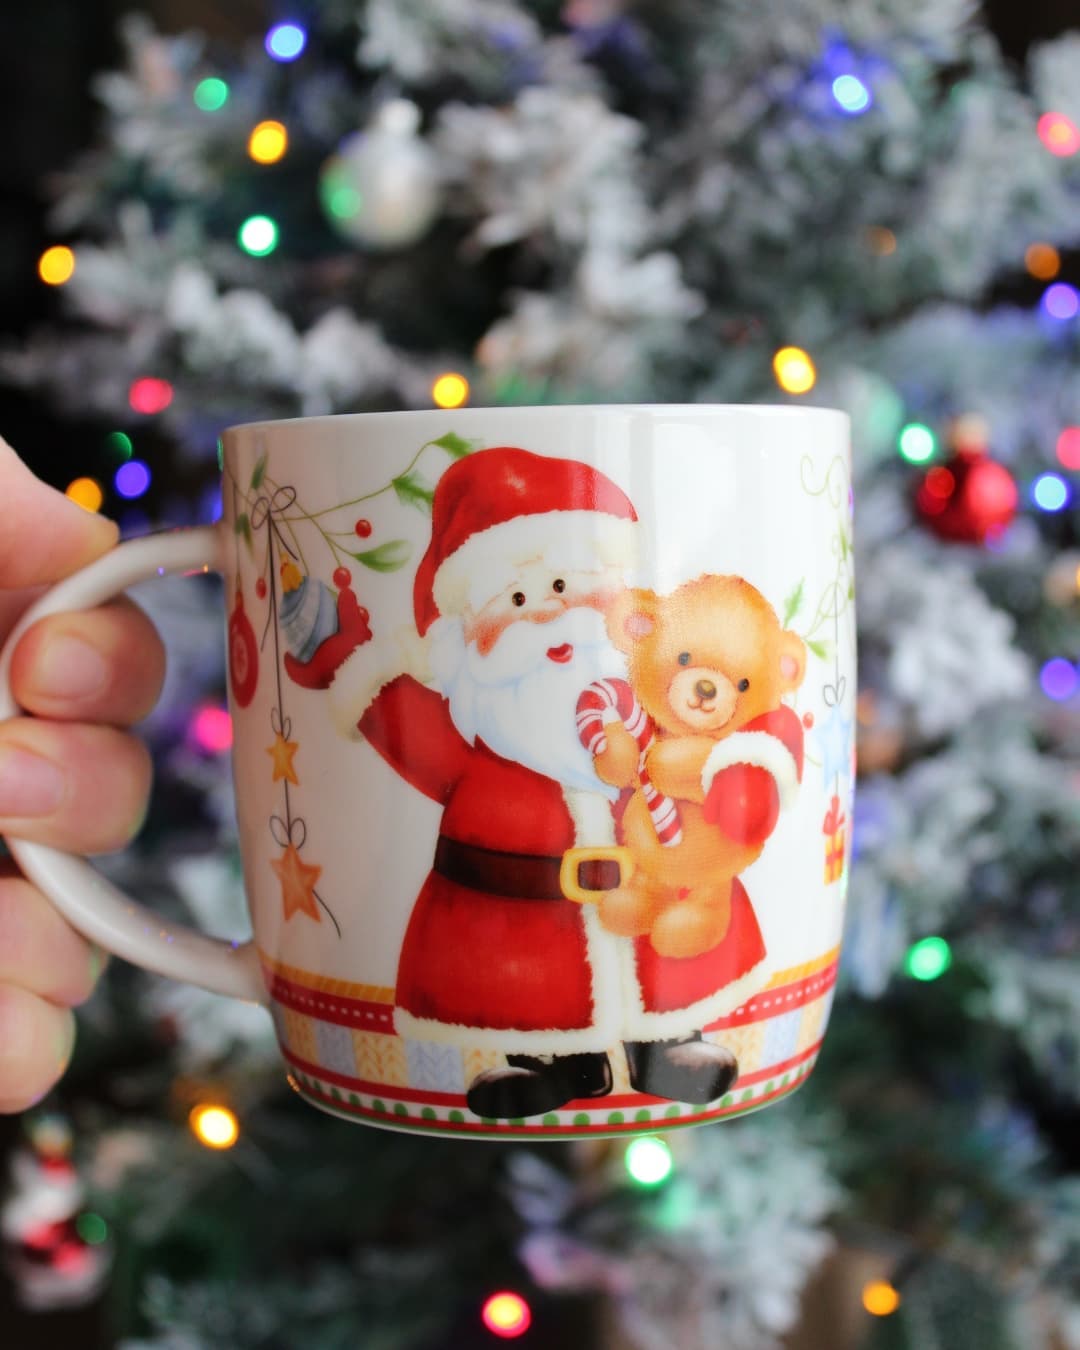 🎅🎄✨ Joyeux Noël !✨🎄🎅

.
.
.
.

#xmas#christmas #christmastime #merrychristmas🎄 #merrychristmas #joyeuxnoel #joyeusefete #bonnoël #fetedenoel #fetedefindannee #papanoel #perenoel #25decembre #blogueusefrancaise #blogueuse #sapindenoel #tassedenoel #decorationnoel #christmastree #love #gouter #buchedenoel #homedecor #designhome #followｍe #partage #cadeaunoel #kdonoel #alexiatiga #meilleurvoeux